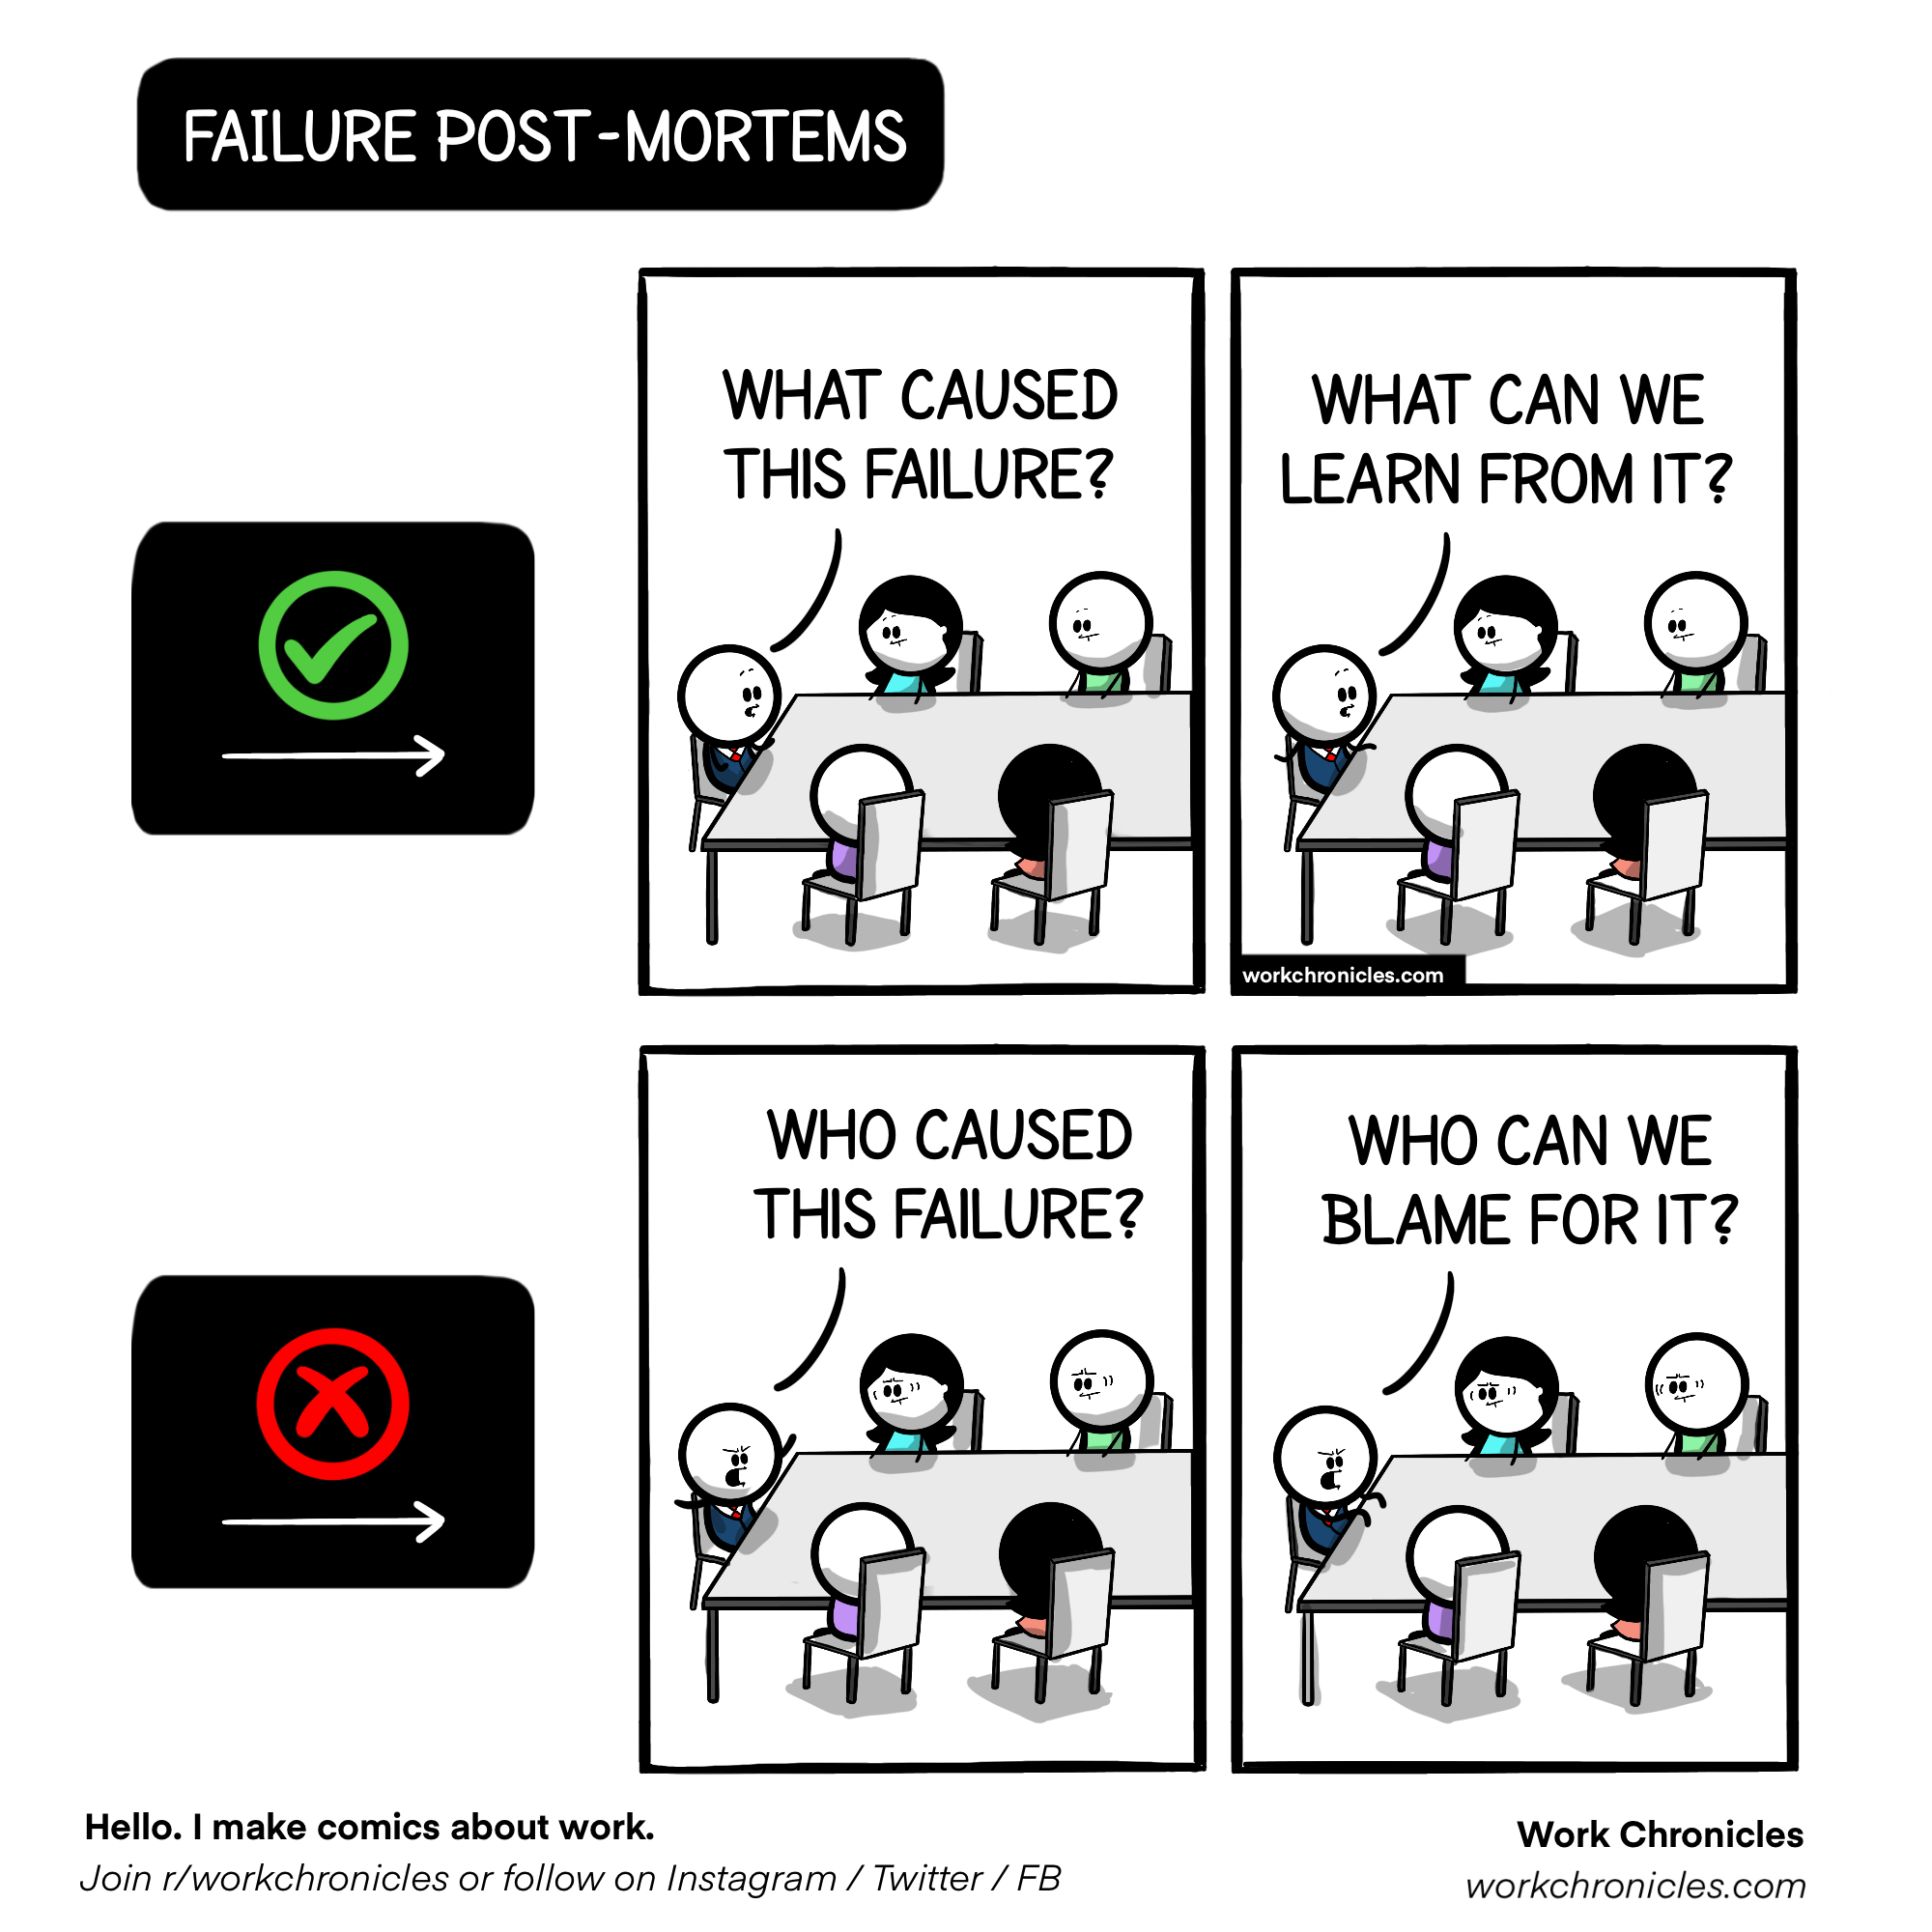 Failure Post-mortems